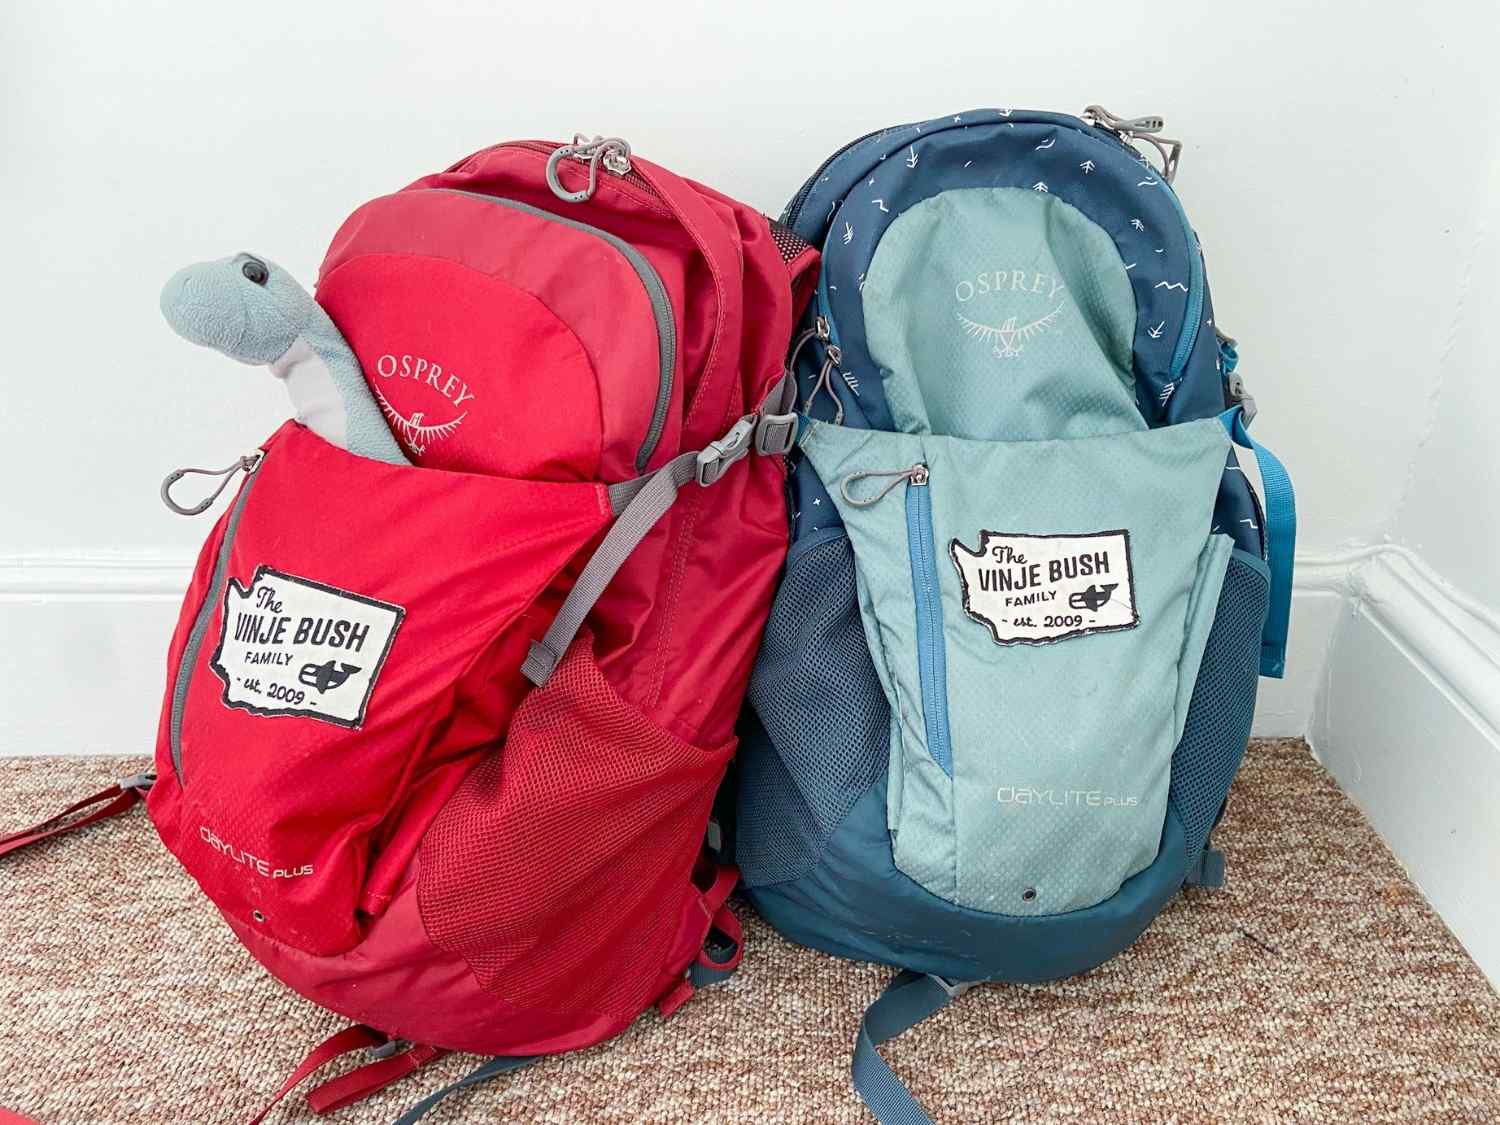 Travel Backpack For Kids Packing List